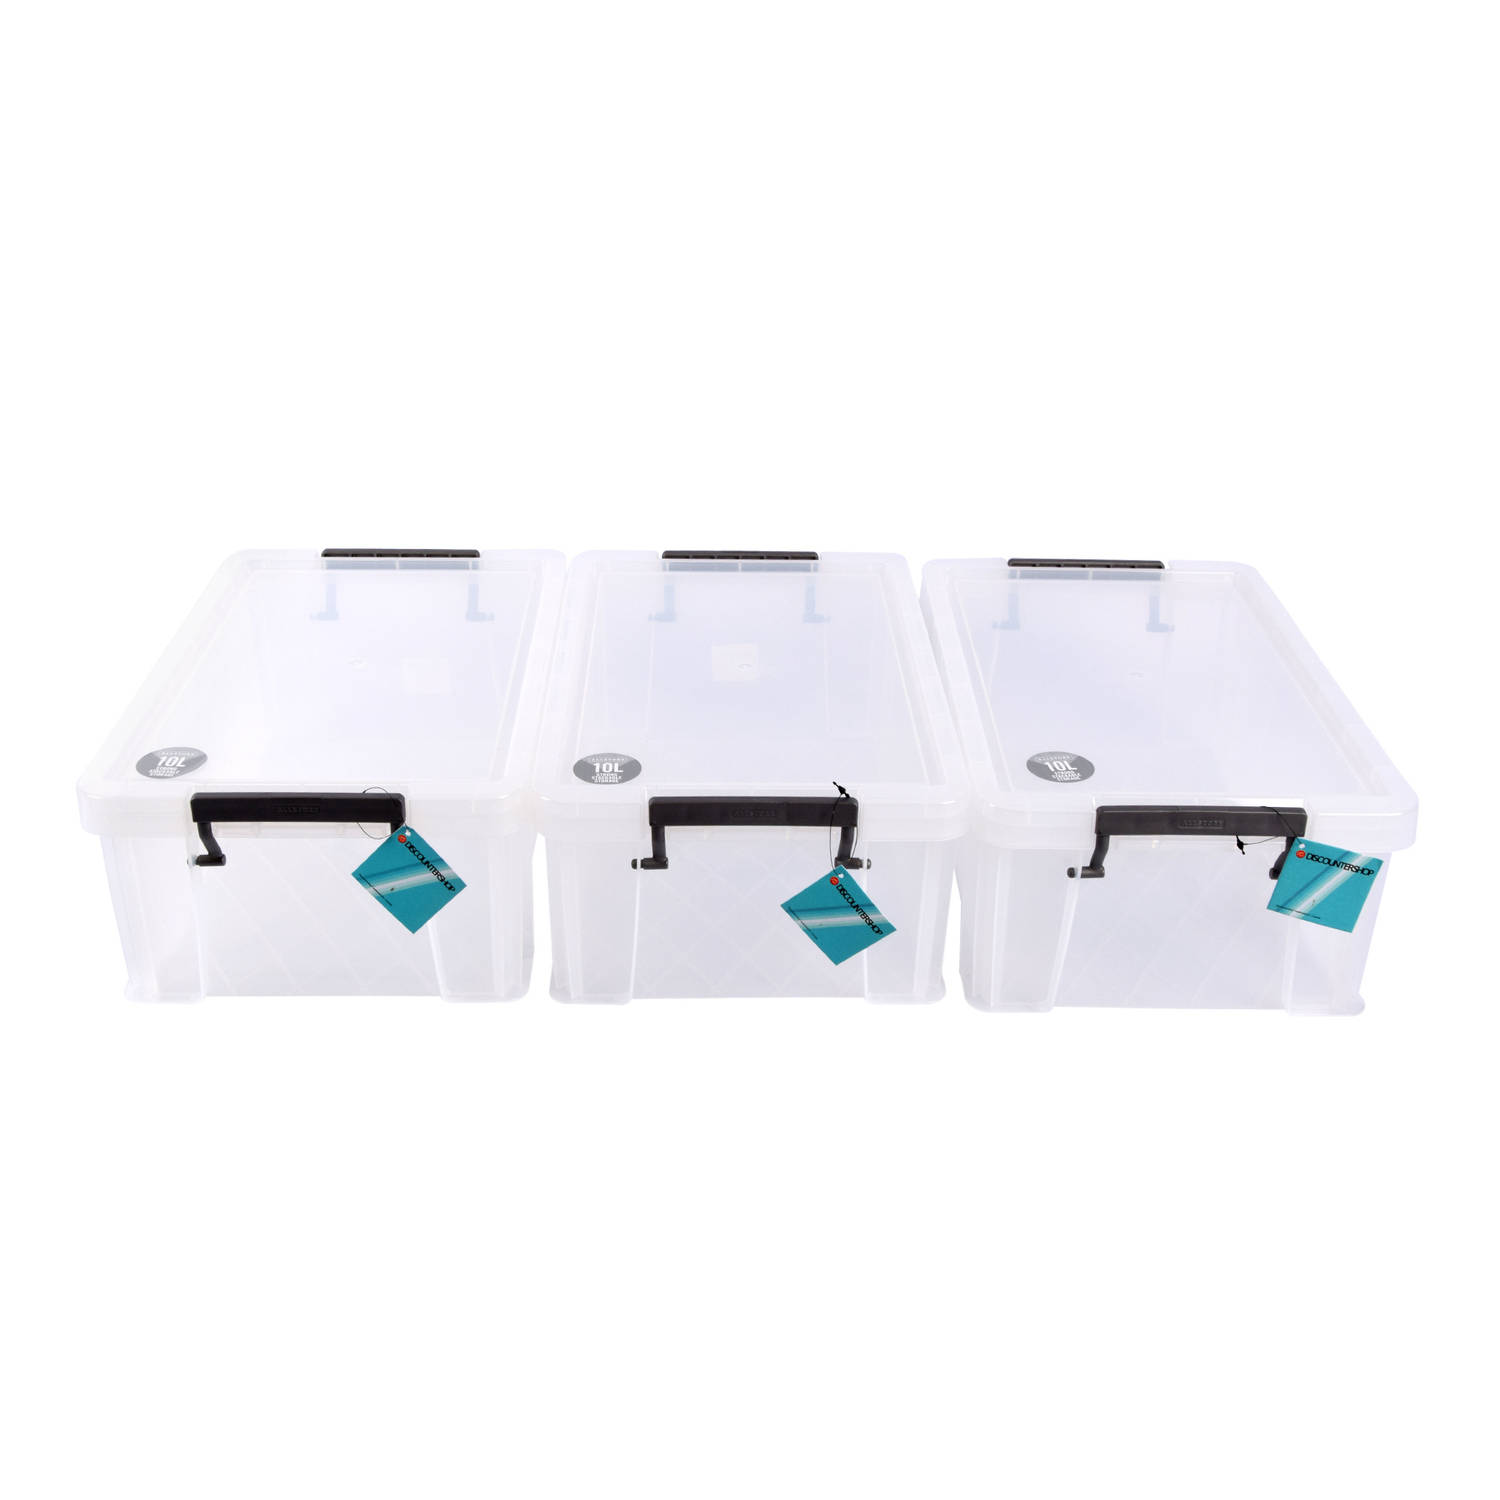 Opbergboxen Set van 3 - Kunststof Opslagboxen met Deksel Transparant - Wit - 39.5cm x 25.5cm x 15cm - Klikdeksel - 10L Capaciteit per Stuk